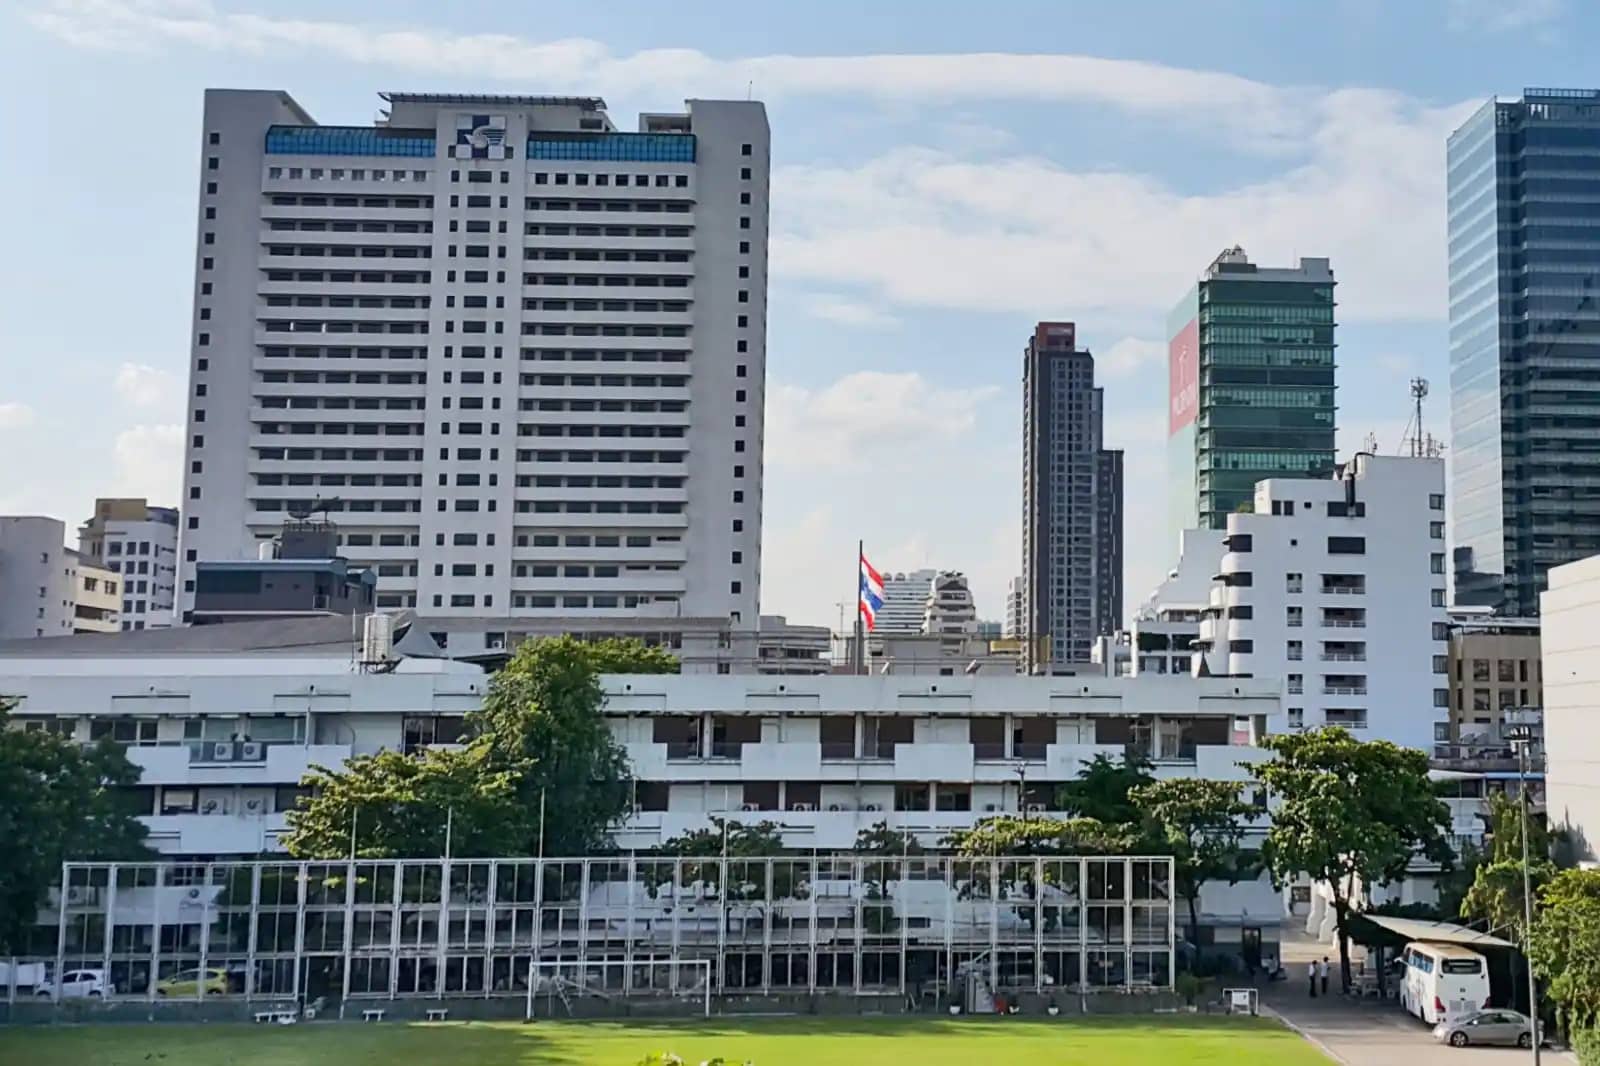 The St. Louis Hospital in Bangkok